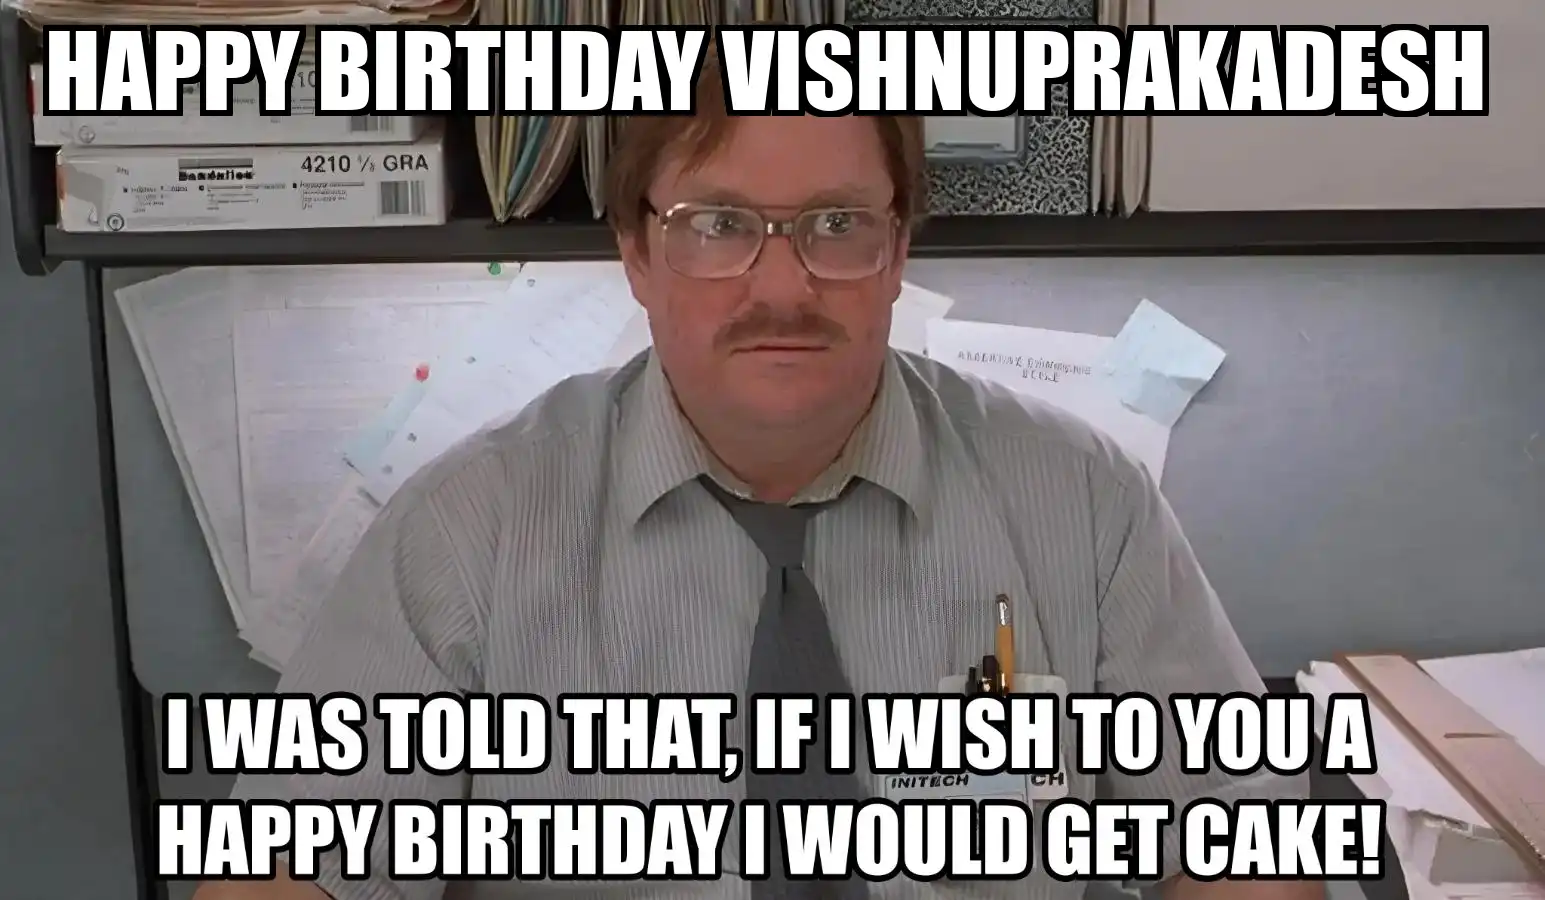 Happy Birthday Vishnuprakadesh I Would Get A Cake Meme